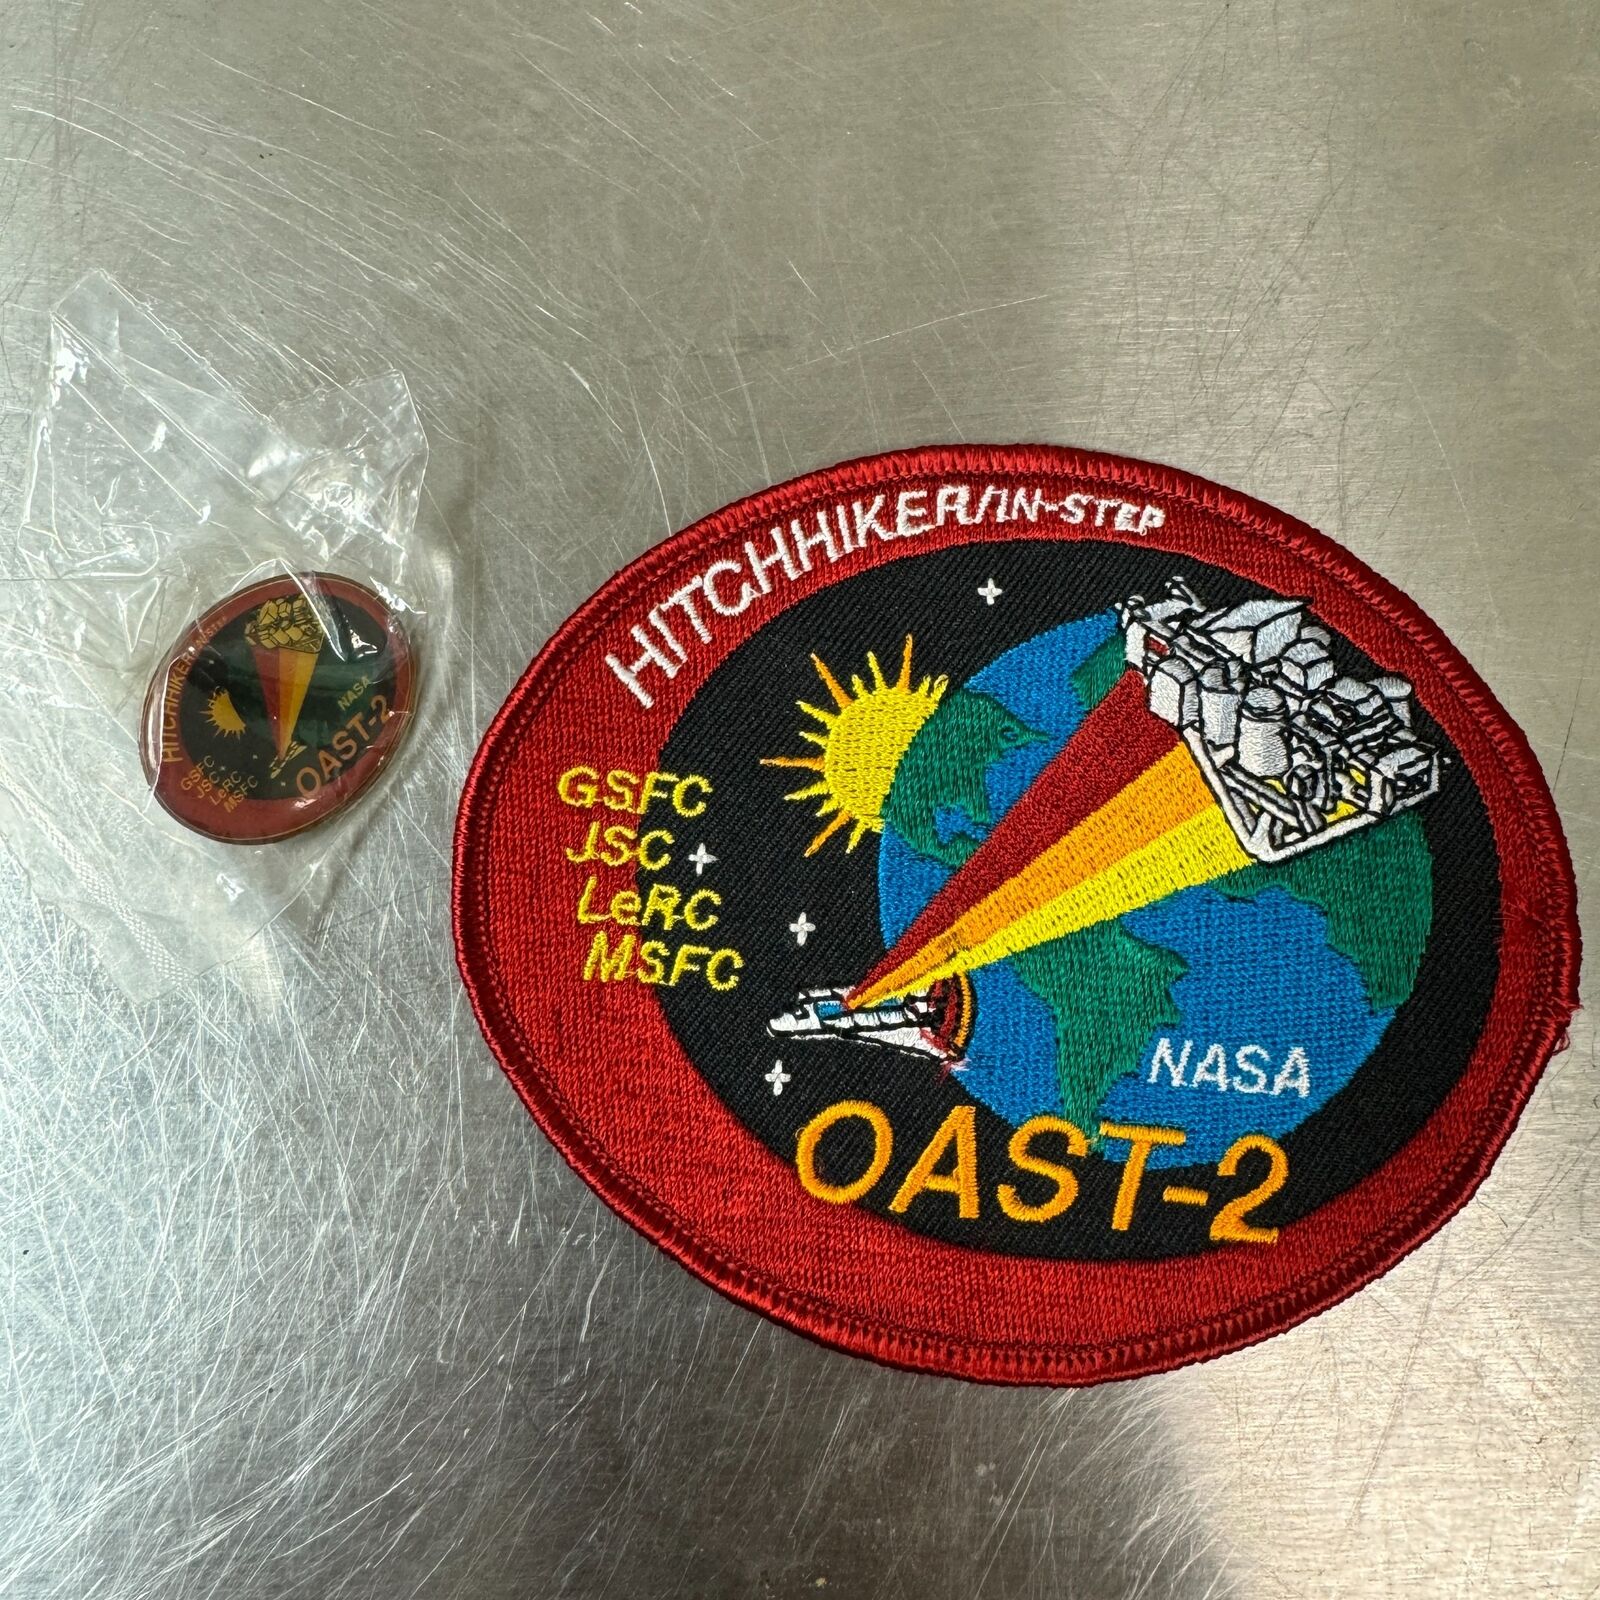 NASA PATCH OAST-2 HITCHHIKER In-Step GSFC JSC LeRC MSFC Oceans Across Space PIN